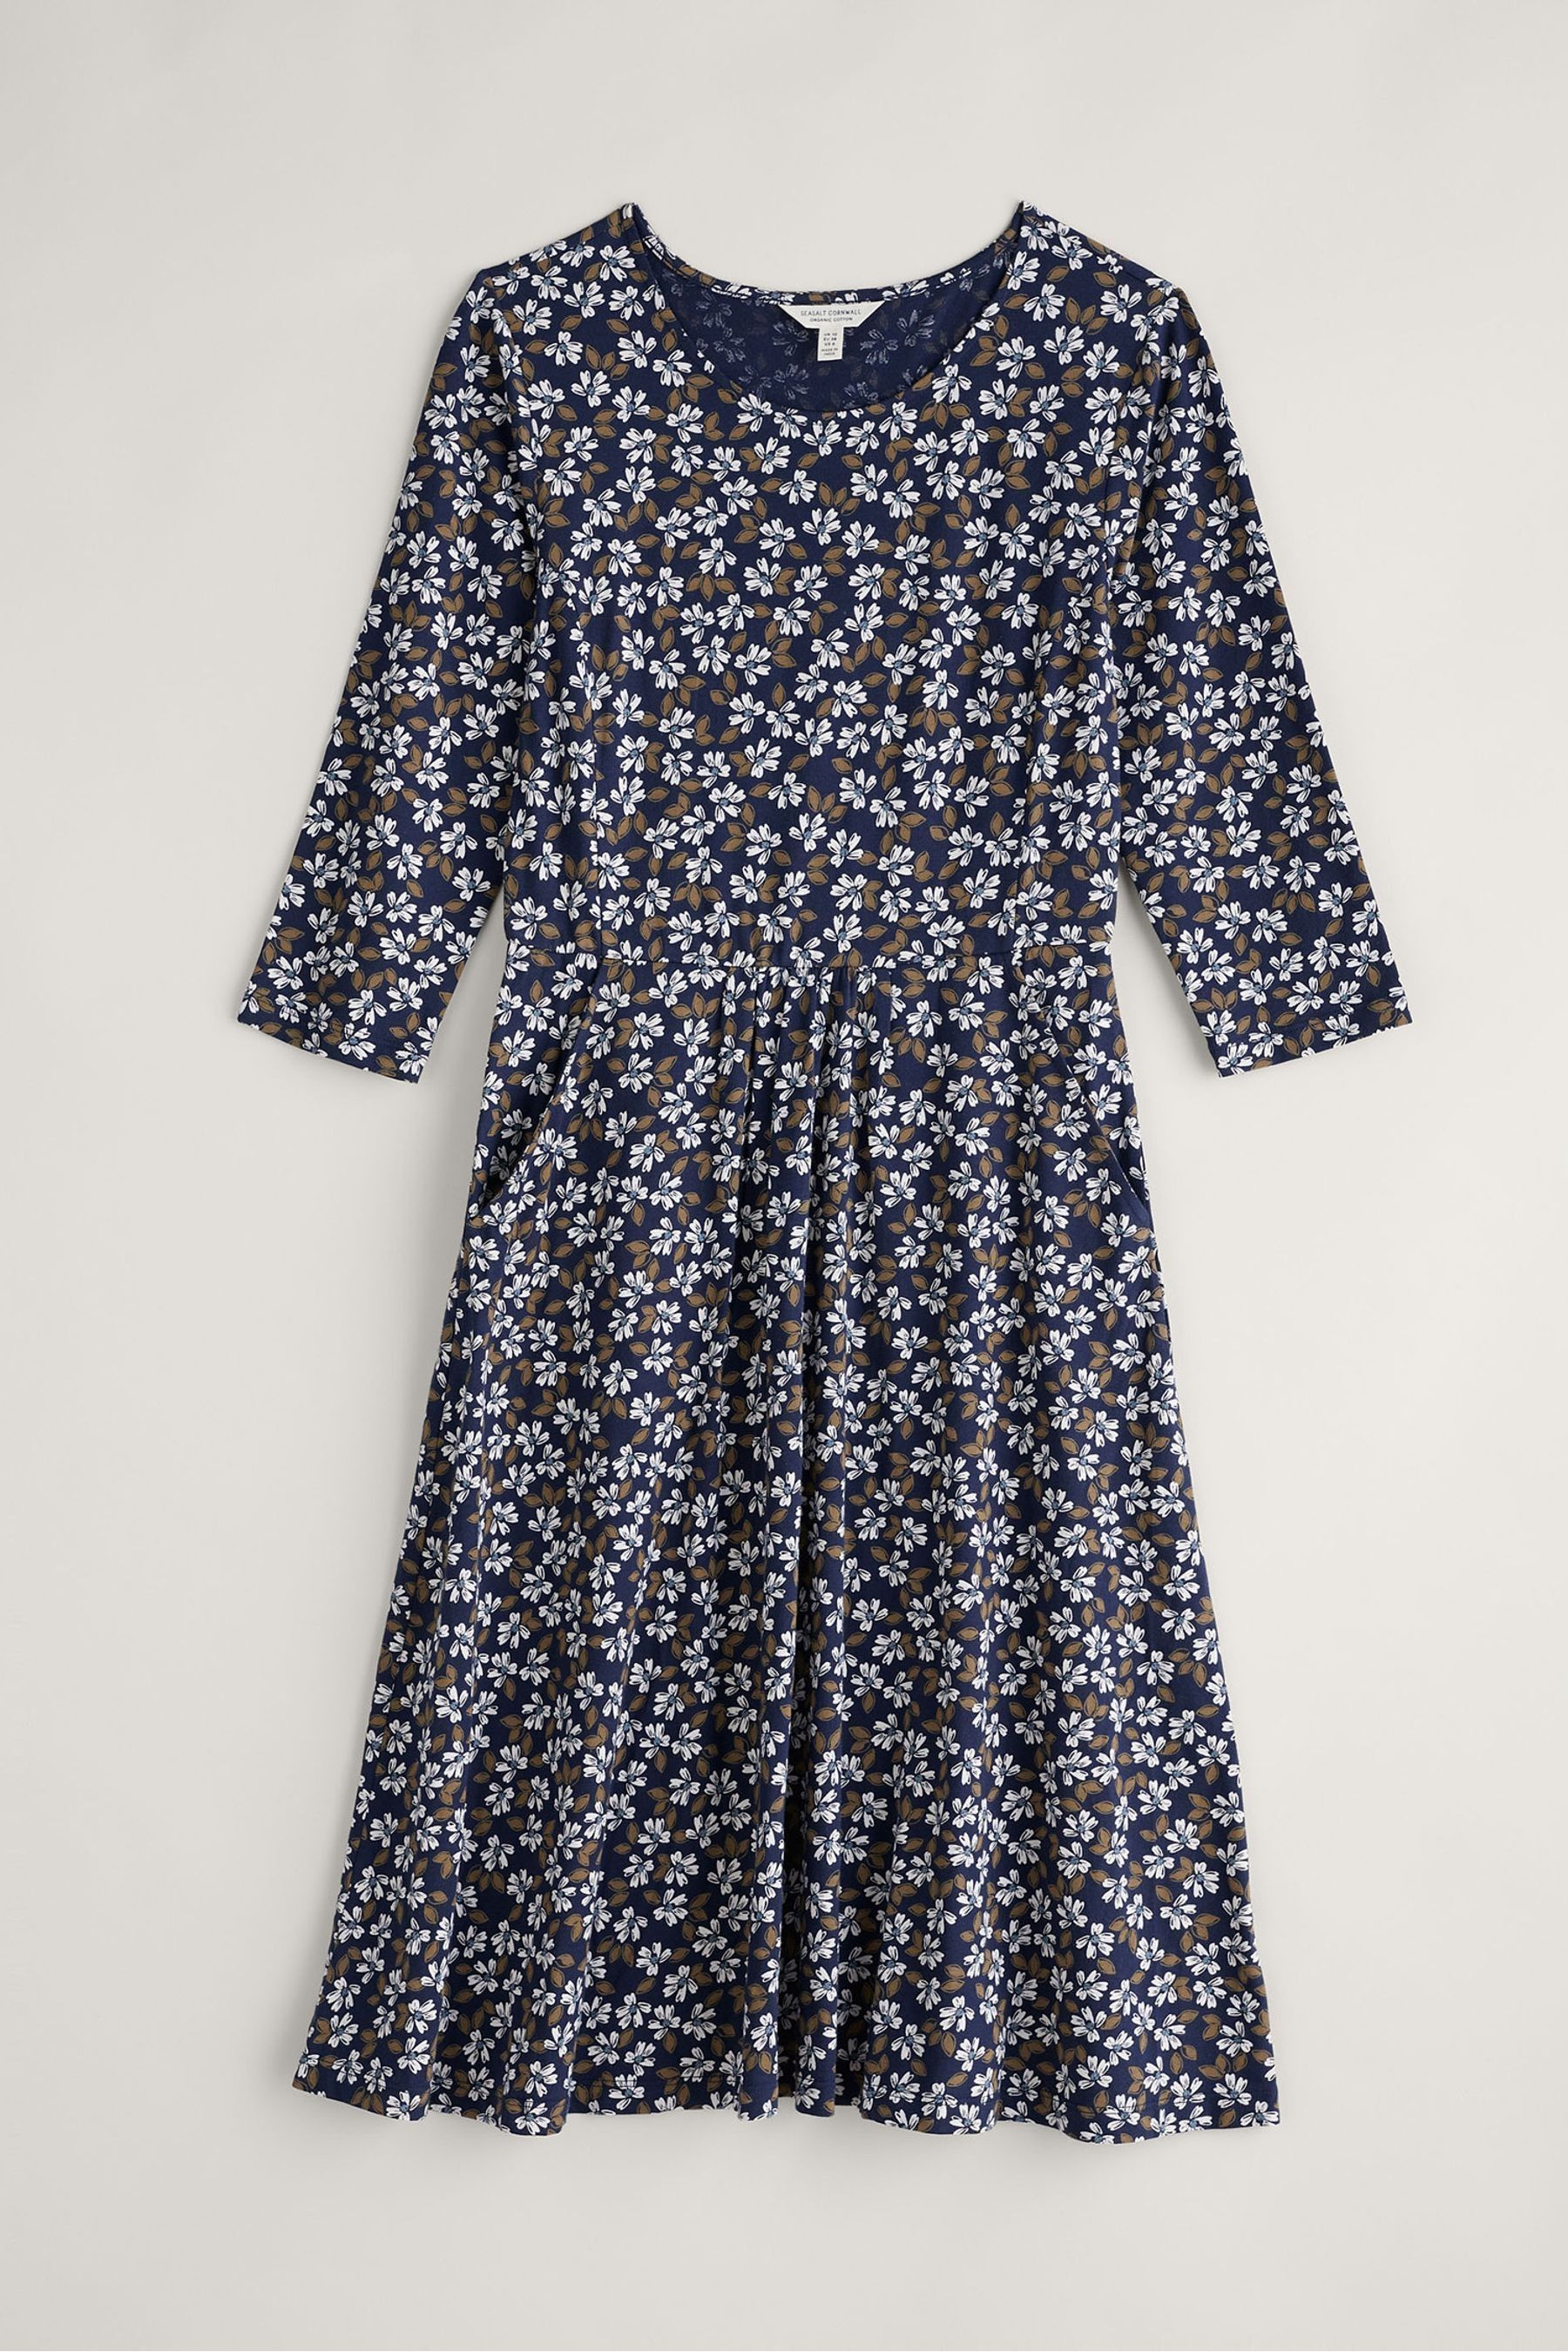 Buy Seasalt Cornwall Blue Petite April Dress from the Next UK online shop